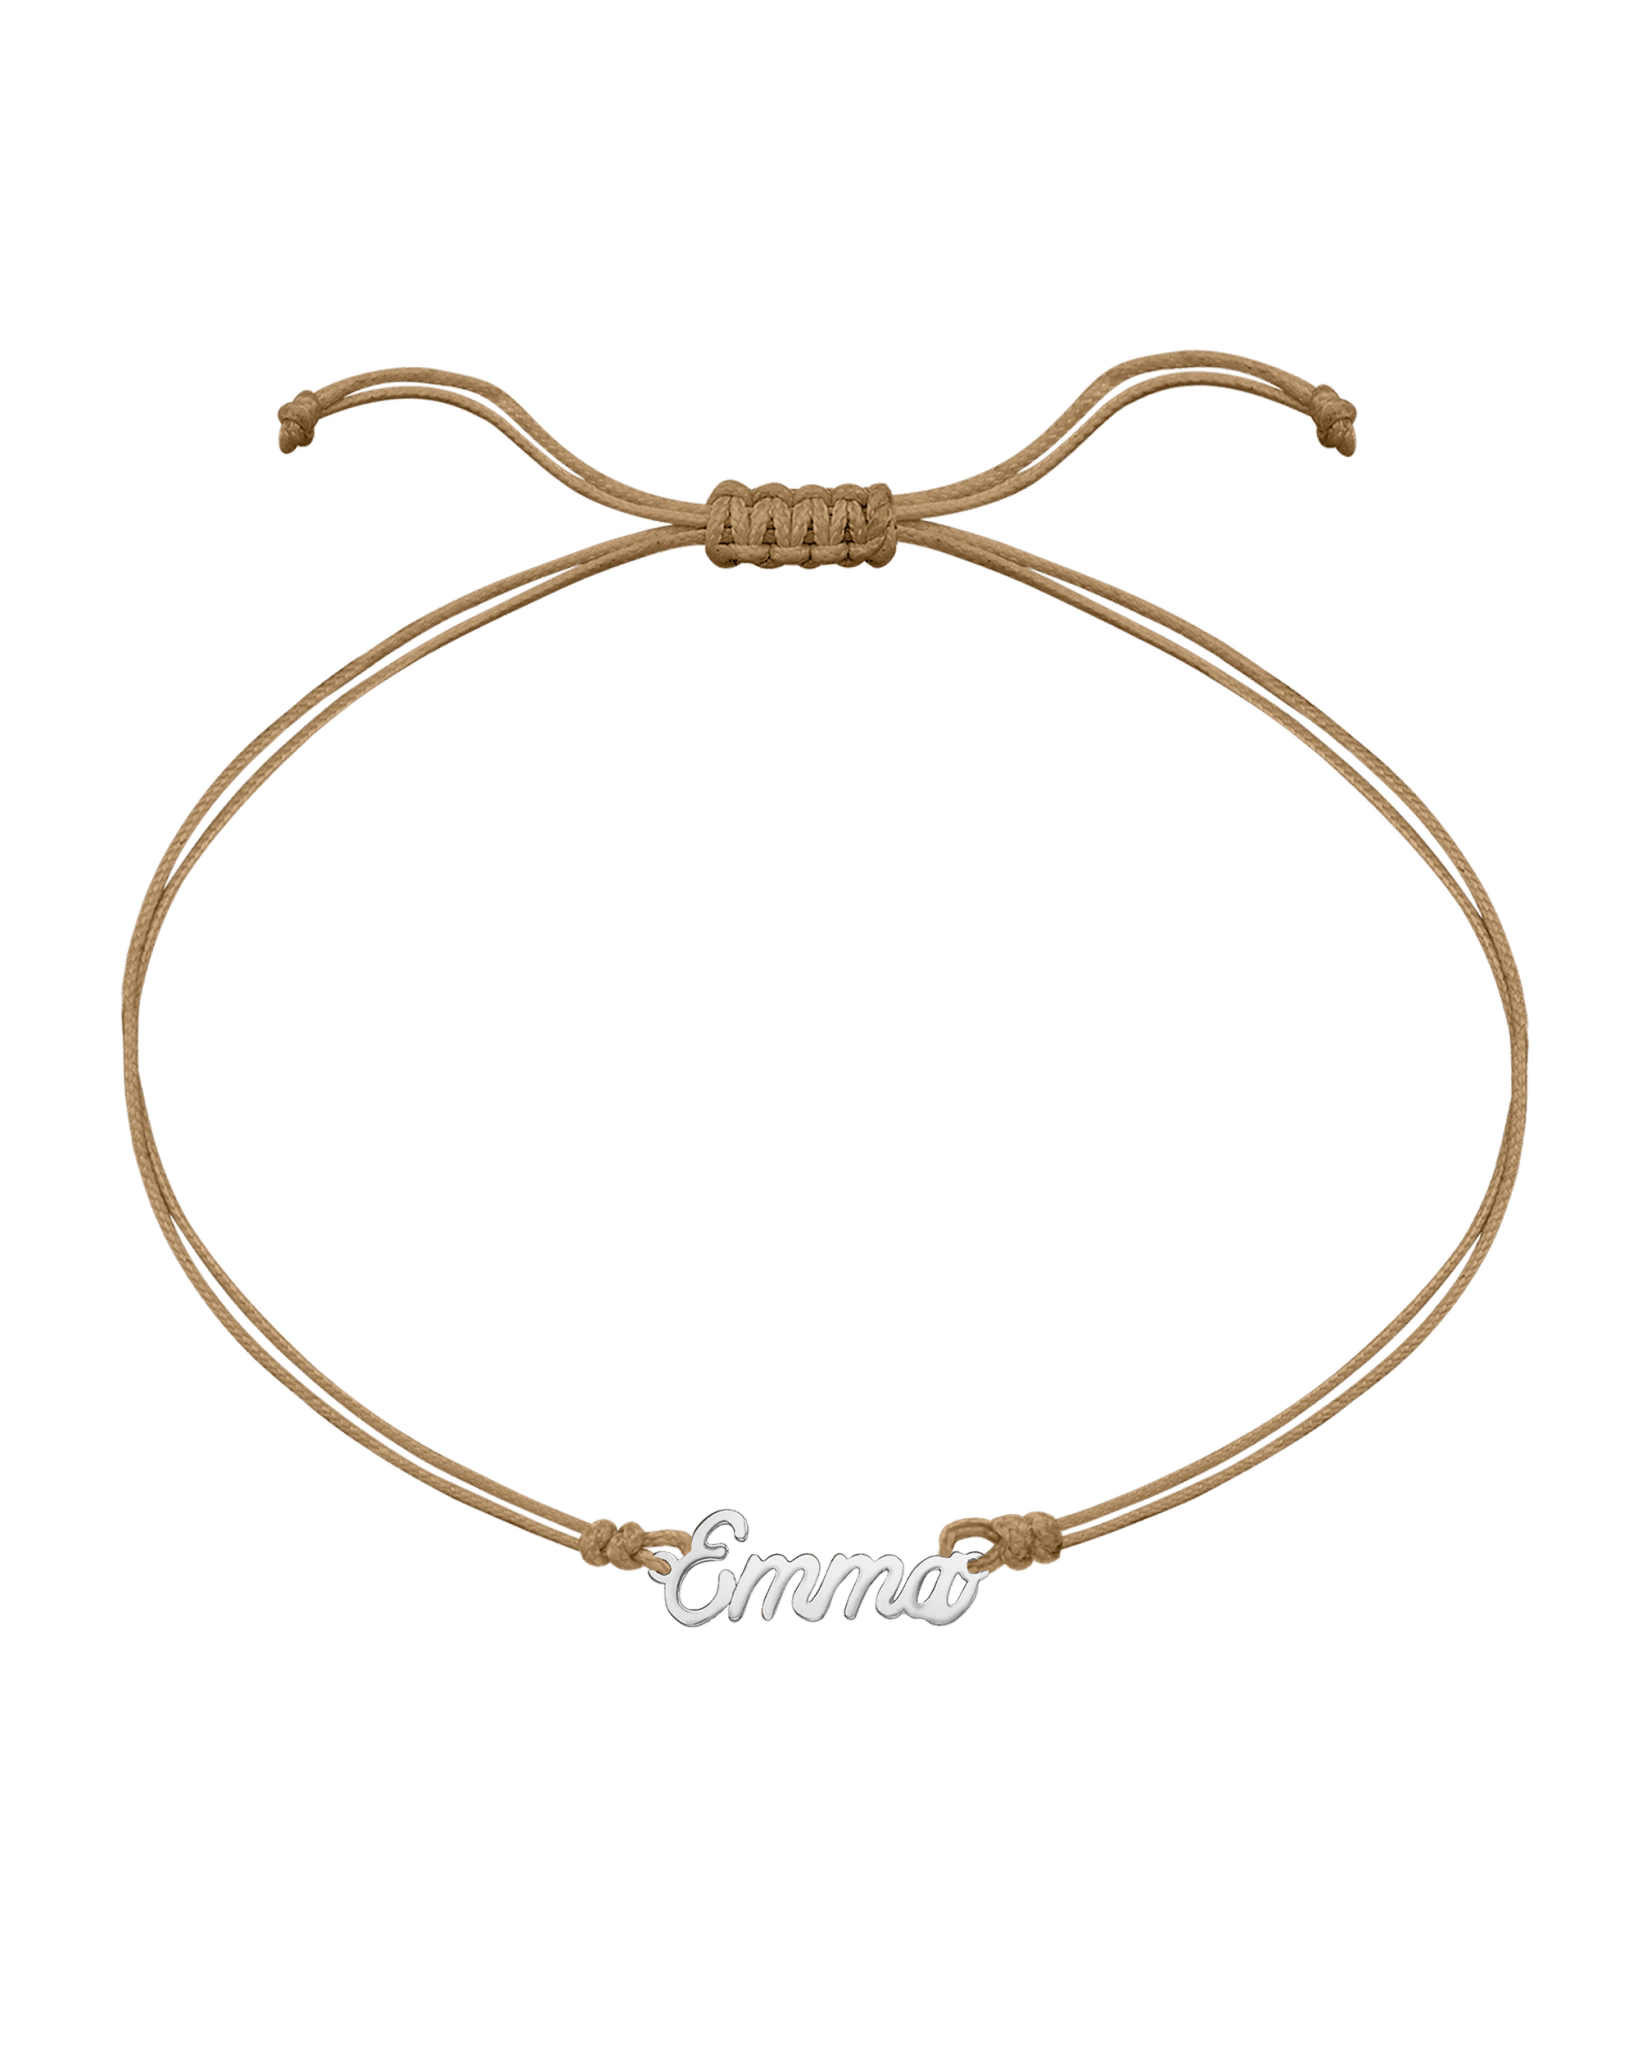 Name Plate String of Love - 14K White Gold Bracelets 14K Solid Gold Camel 1 